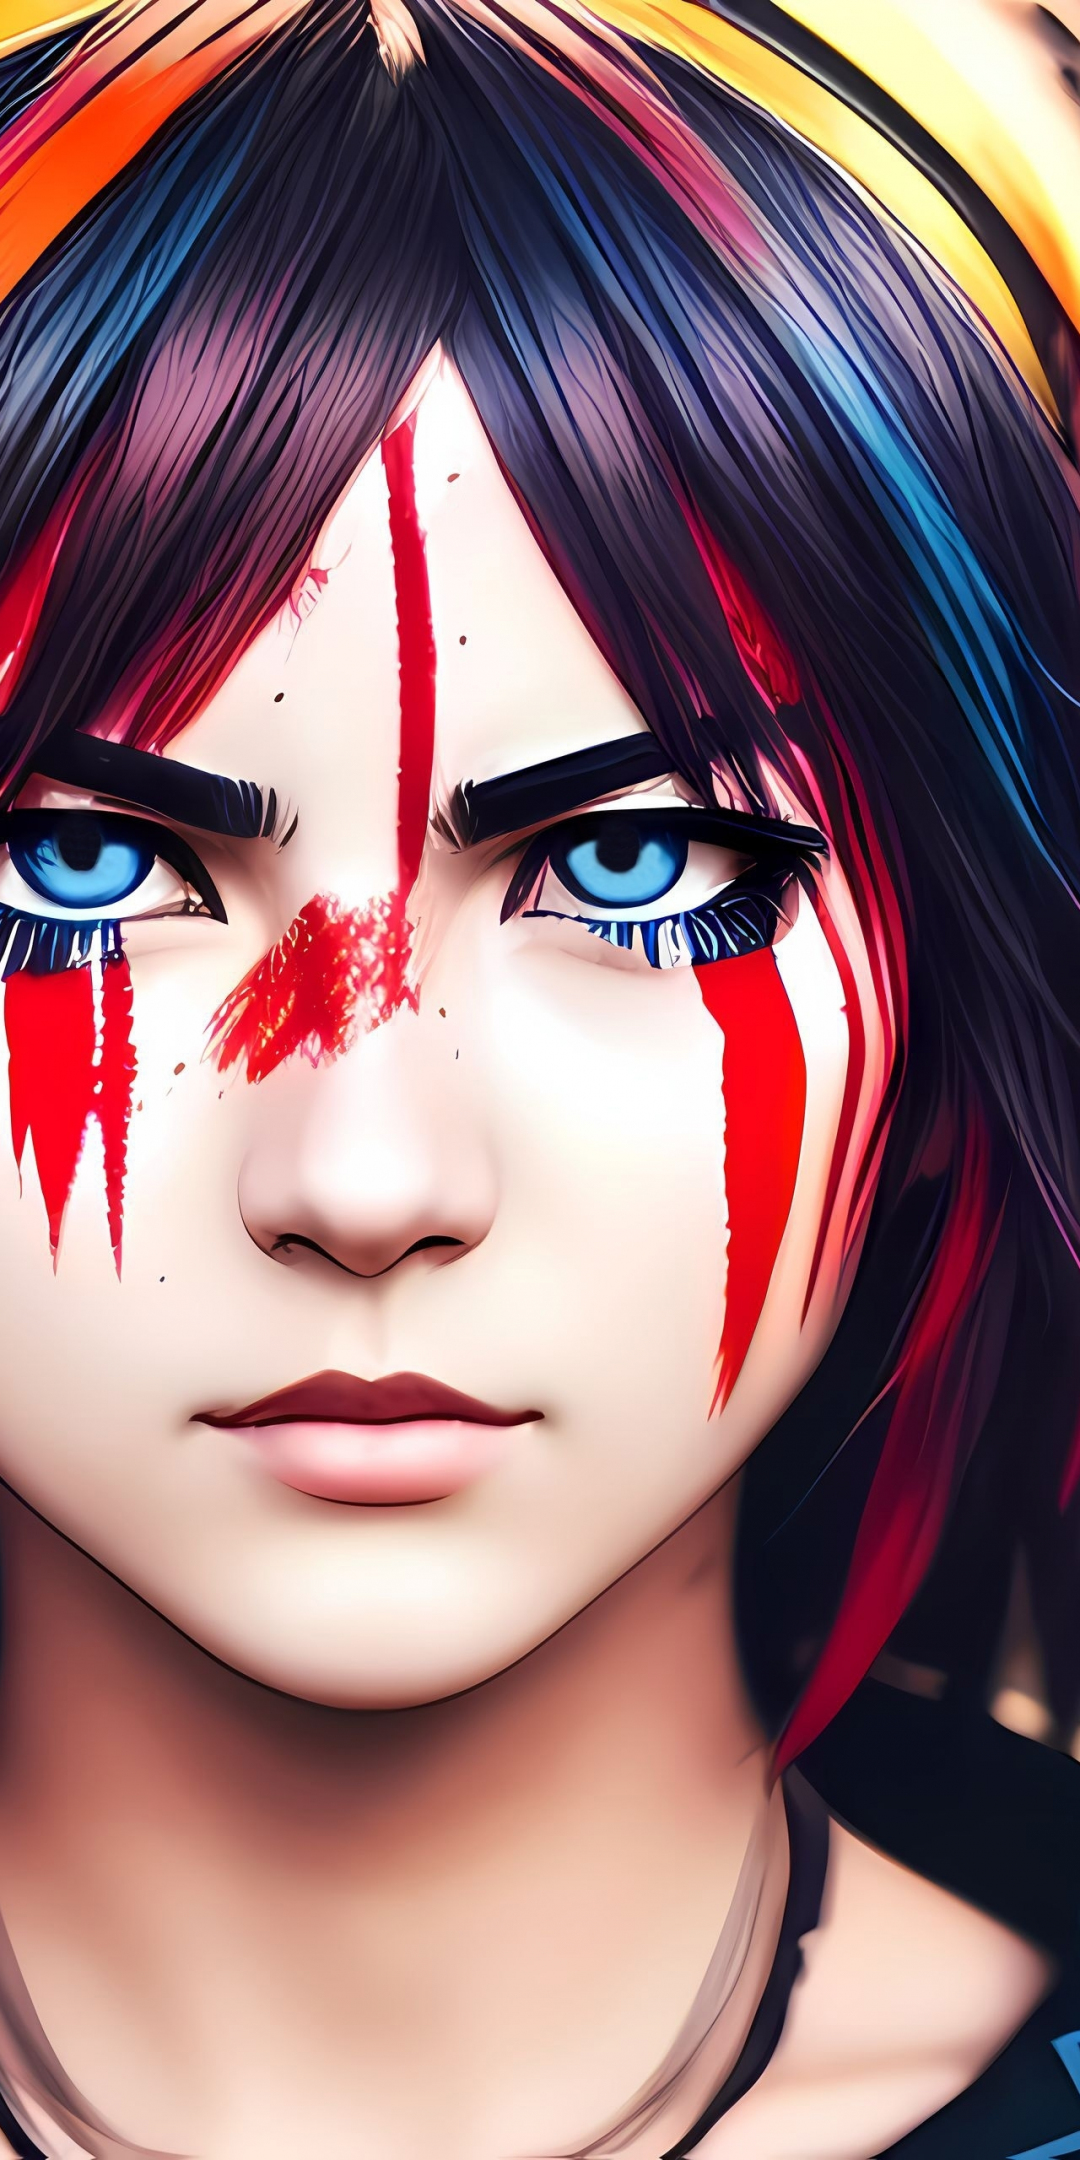 Blue eyed woman, angry teen, art, 1080x2160 wallpaper